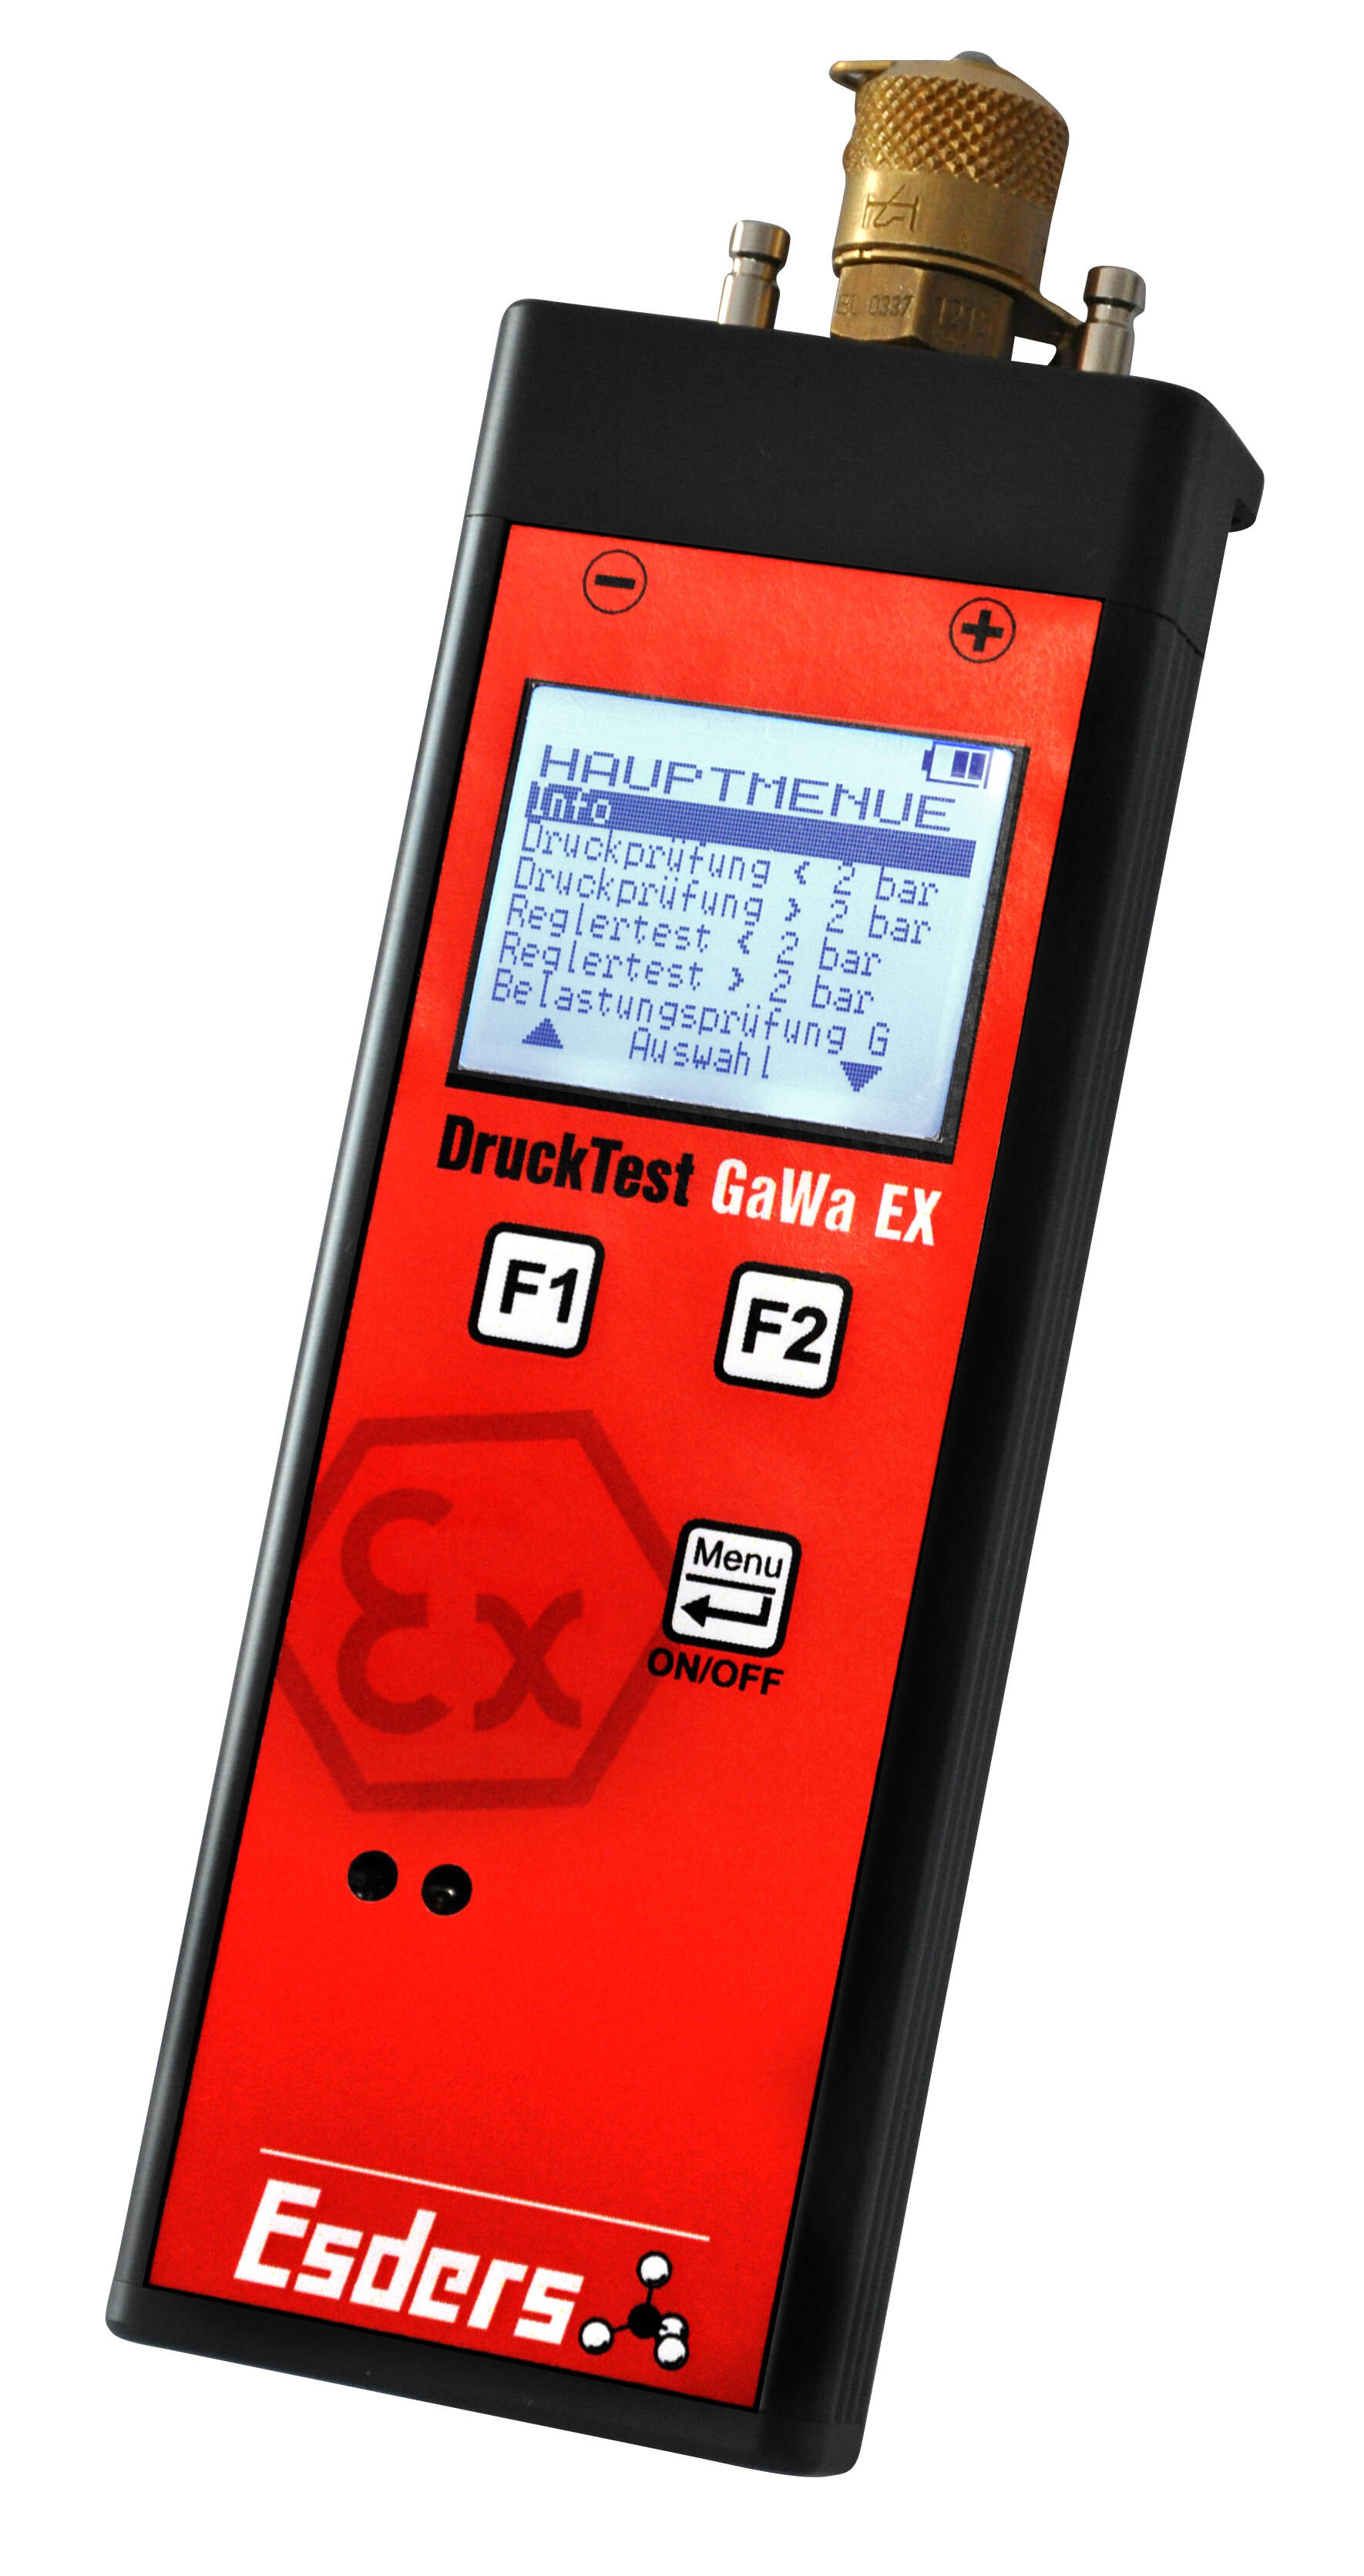 DruckTest GaWa EX HMG2 with alcaline battery